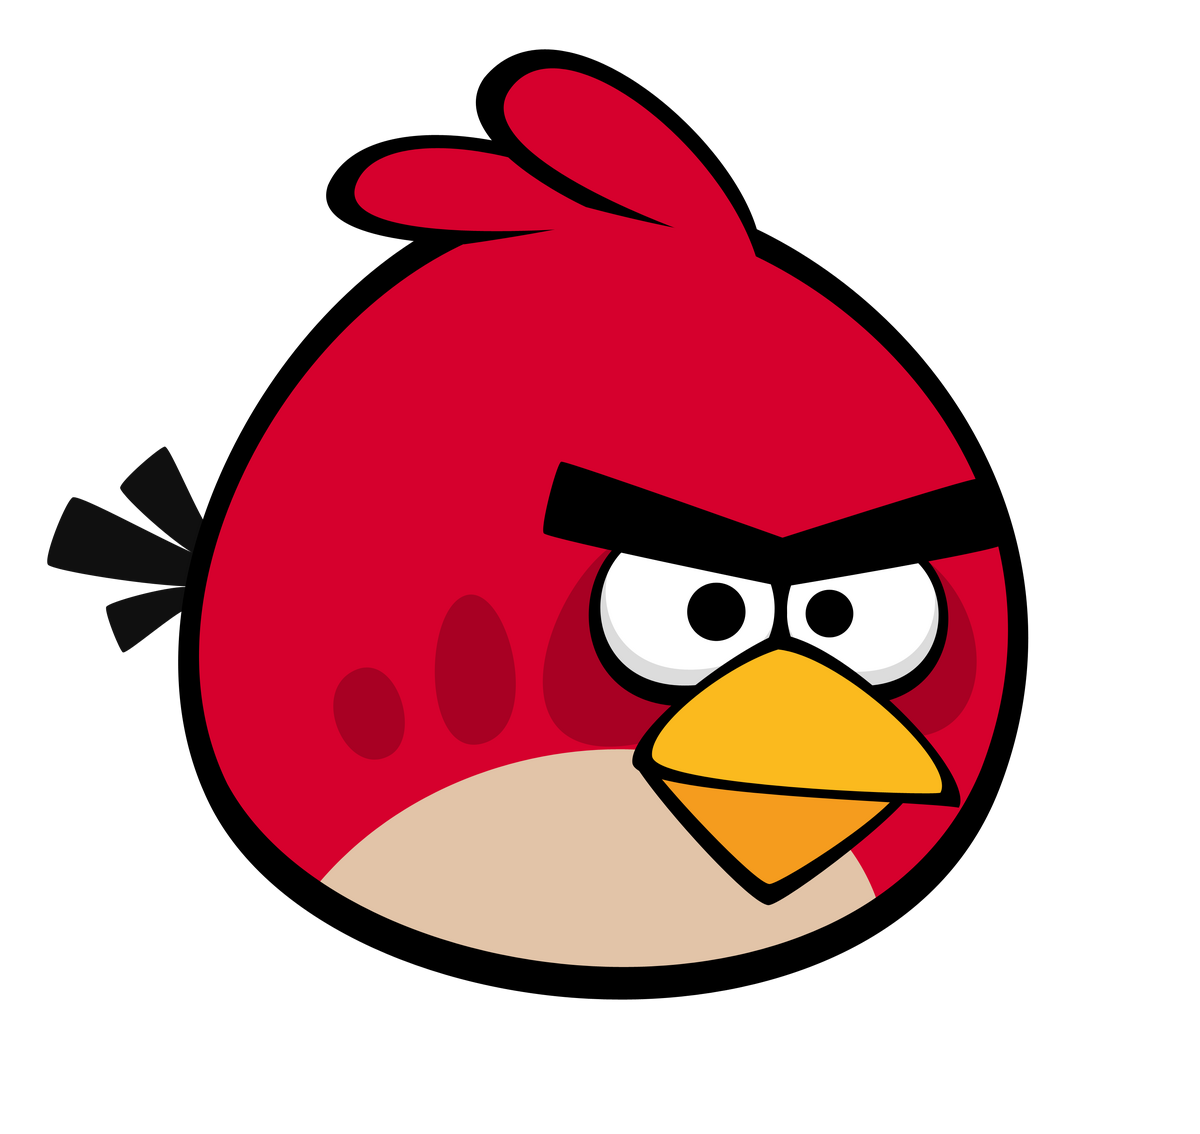 angrybirds-wiki-regulamin-angry-birds-wiki-fandom